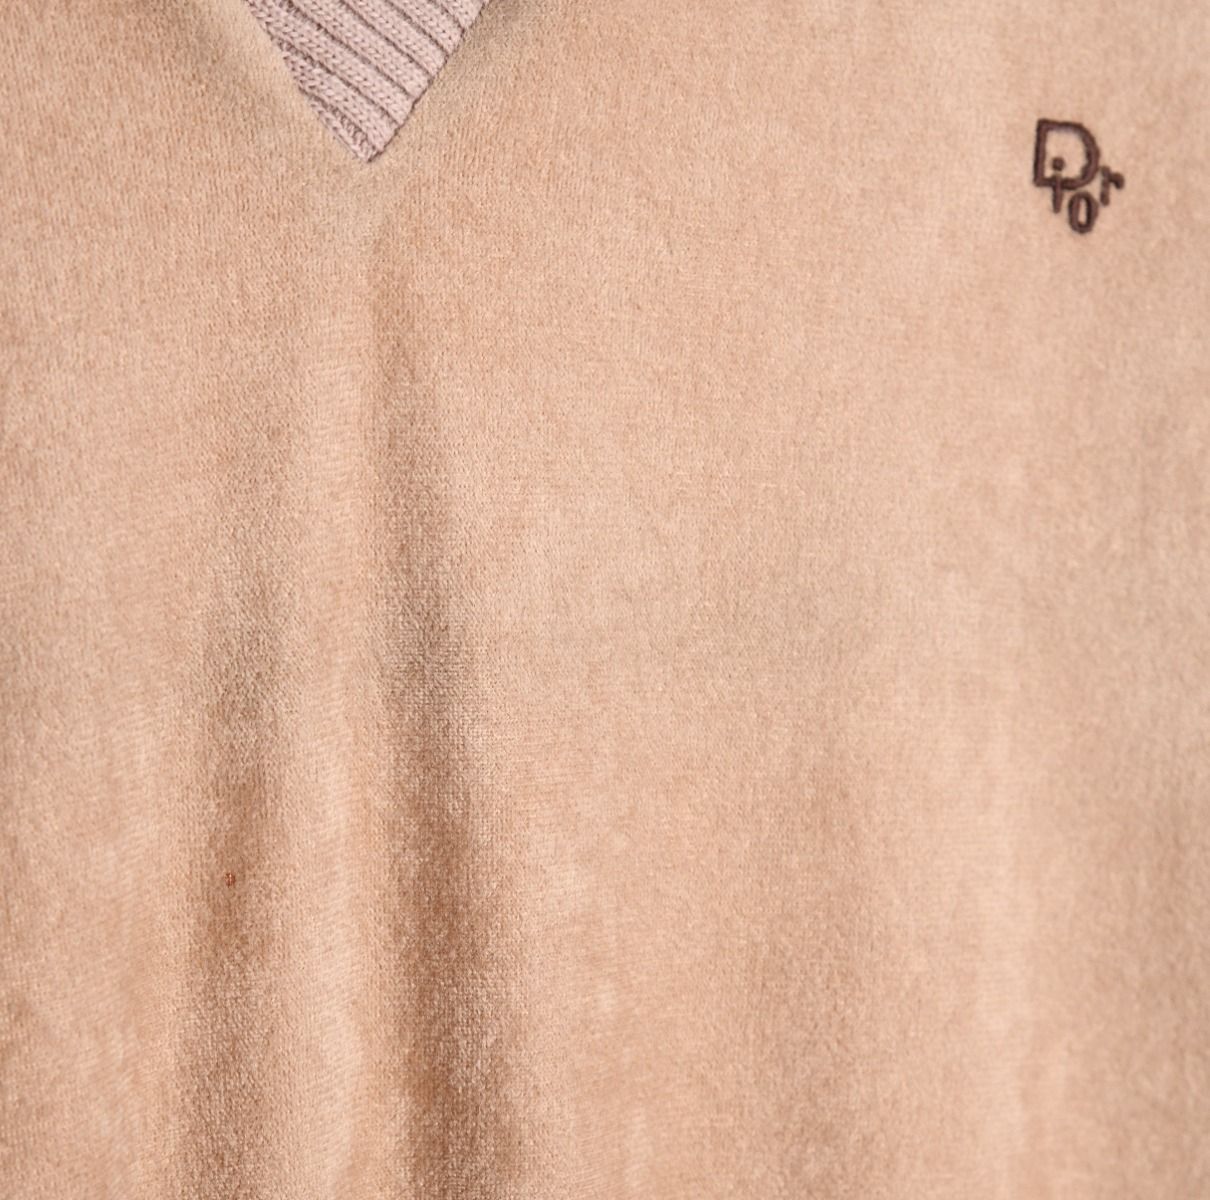 Christian Dior 1960s Velour V-Neck Sweatshirt